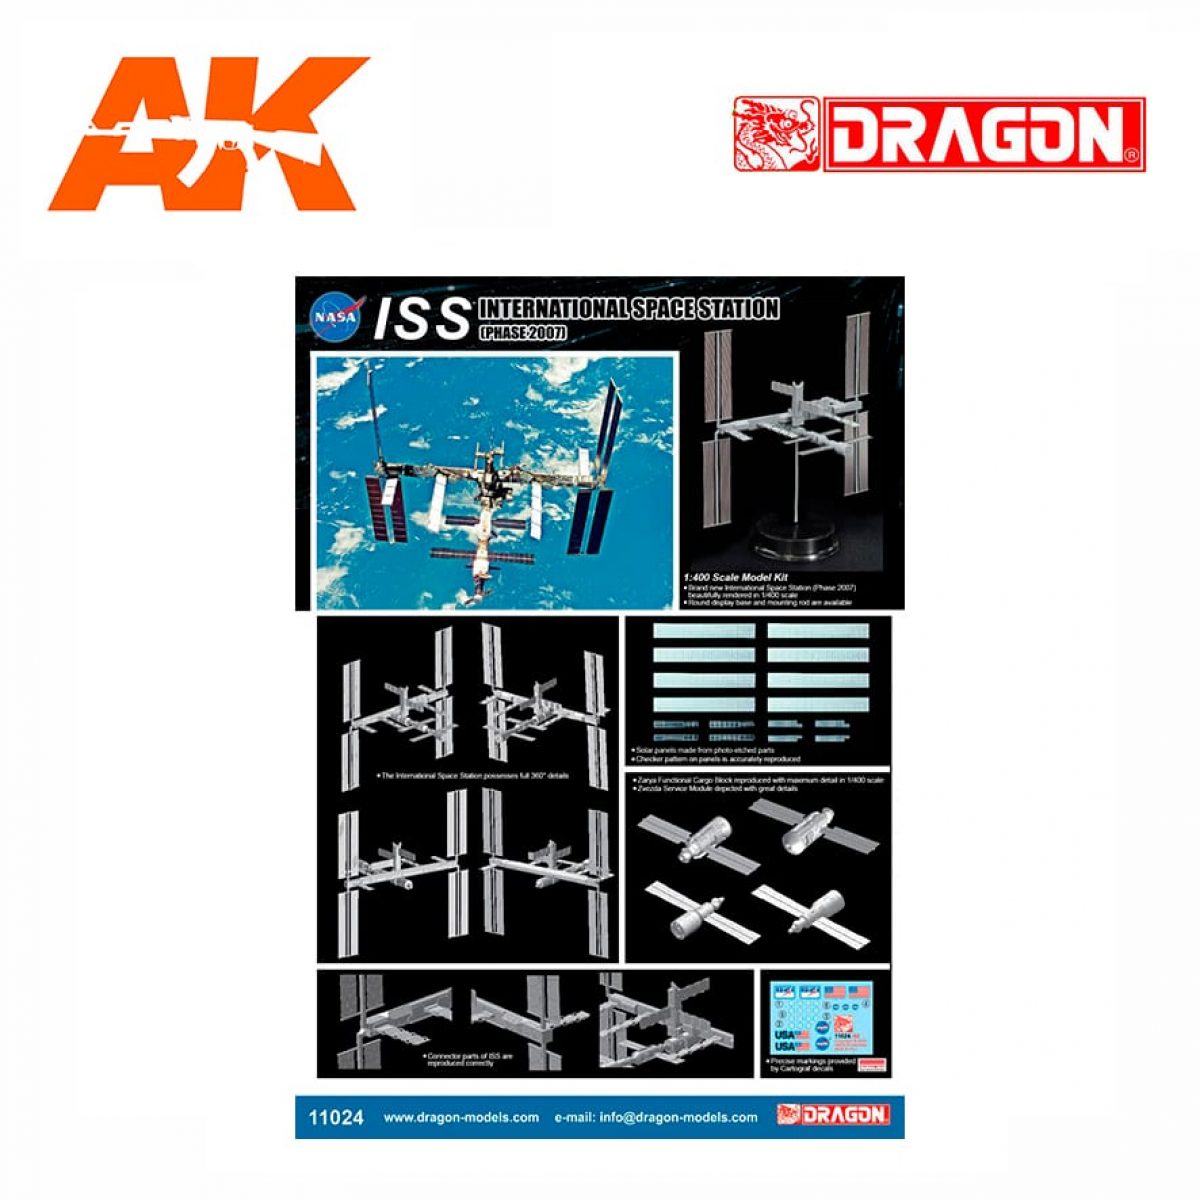 Dragon Models 1/400 International Space Station Plastic Model Kit 1 for sale online phase 2007 